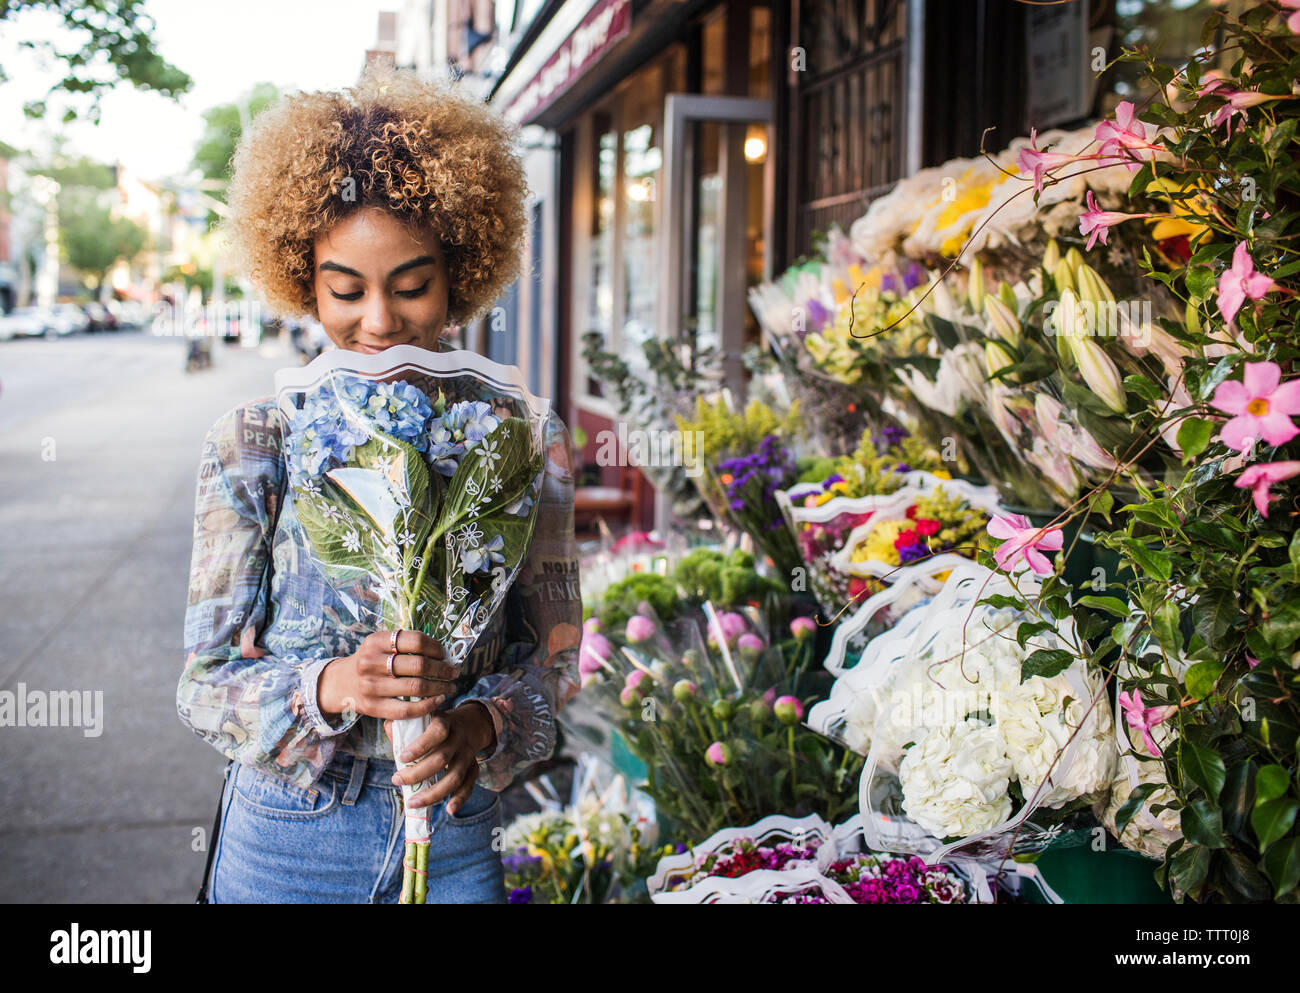 Smiling woman smelling hydrangeas outside flower shop Stock Photo